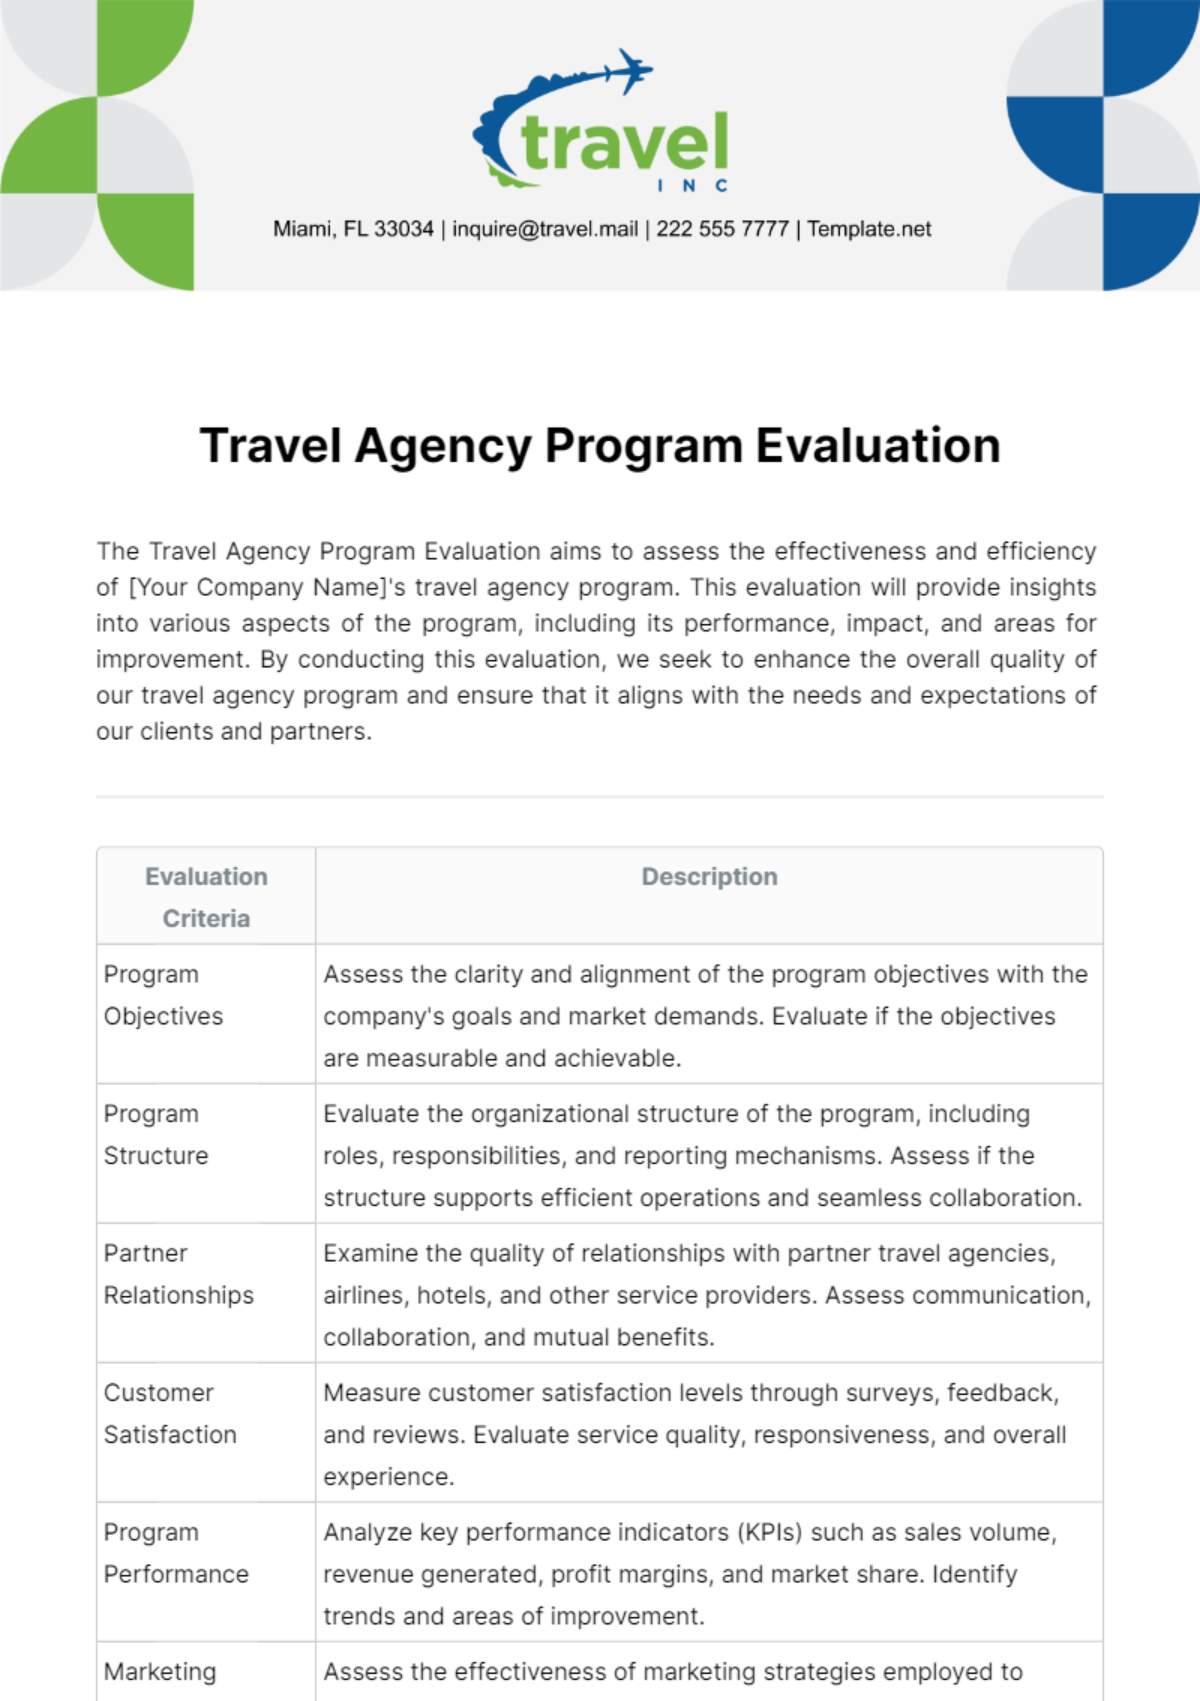 Travel Agency Program Evaluation Template